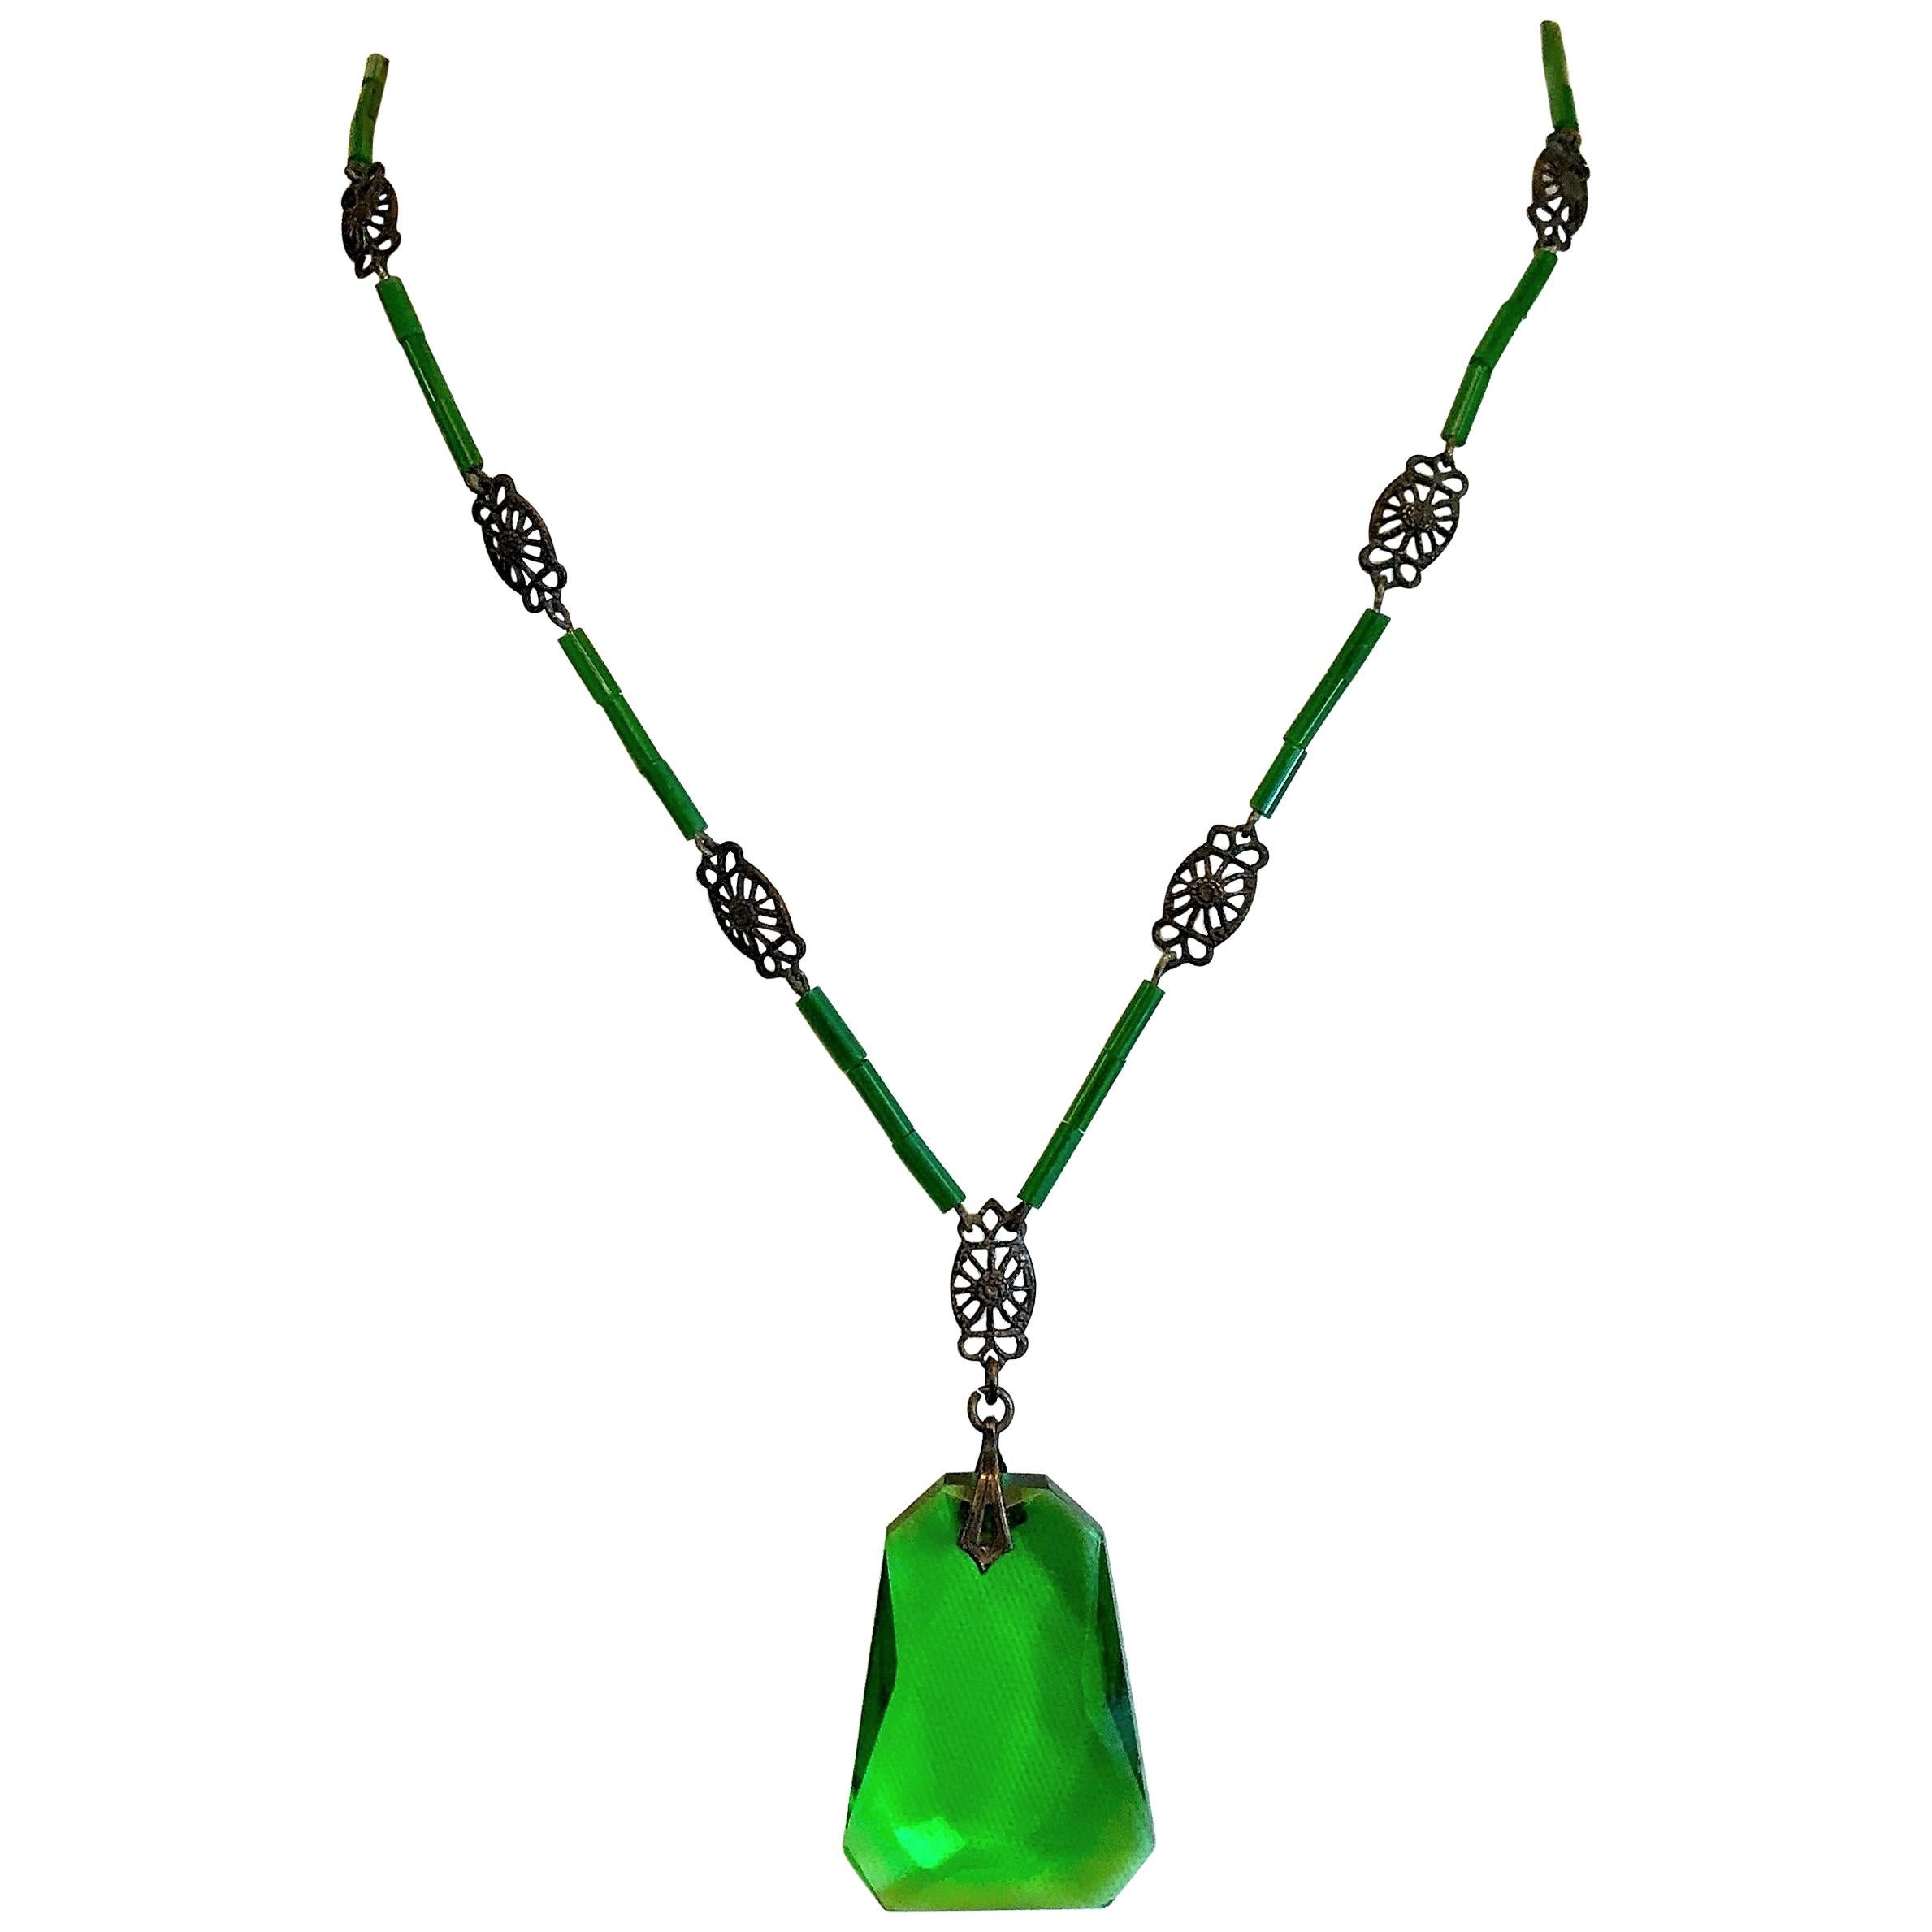 Circa 1920s Deco Era Green Faceted Glass Pendant Necklace  For Sale